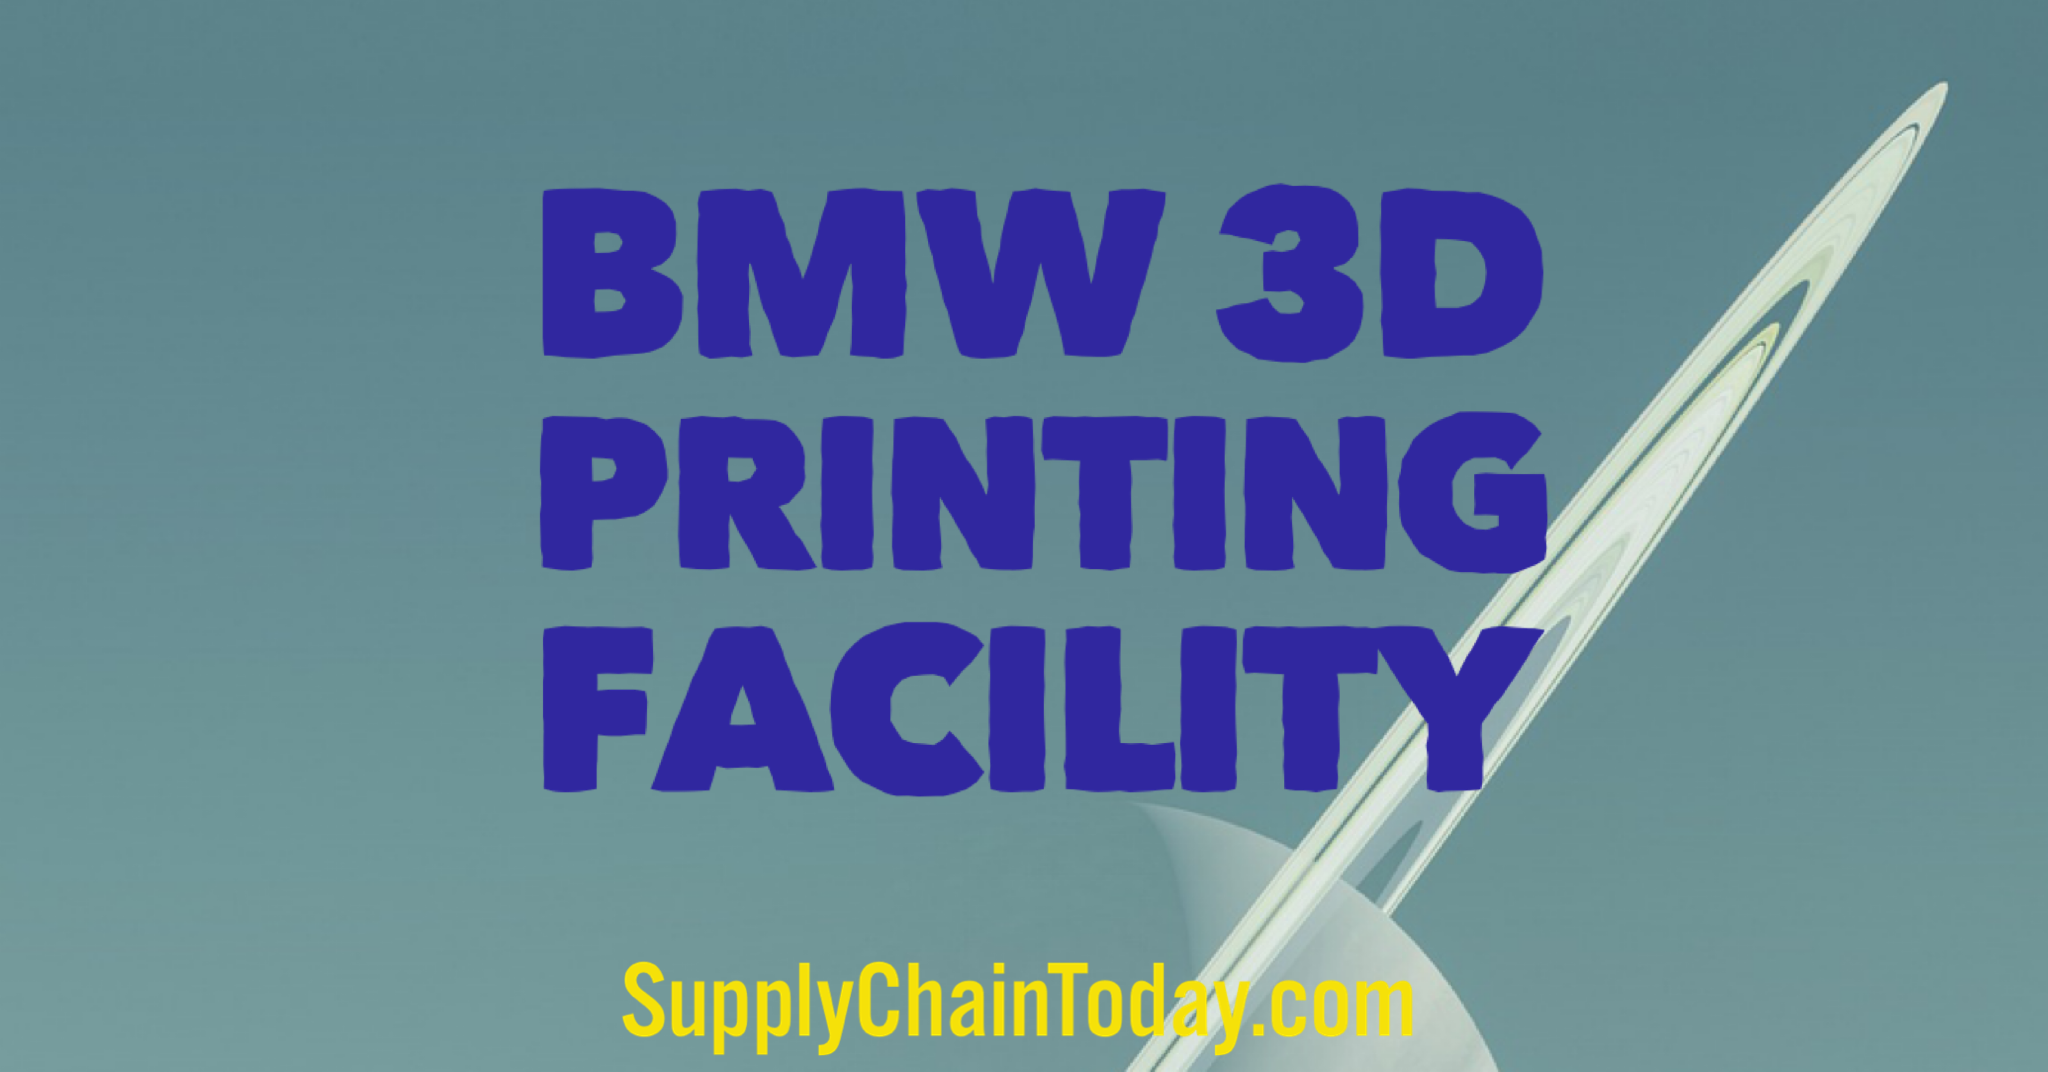 BMW 3D Printing Facility.